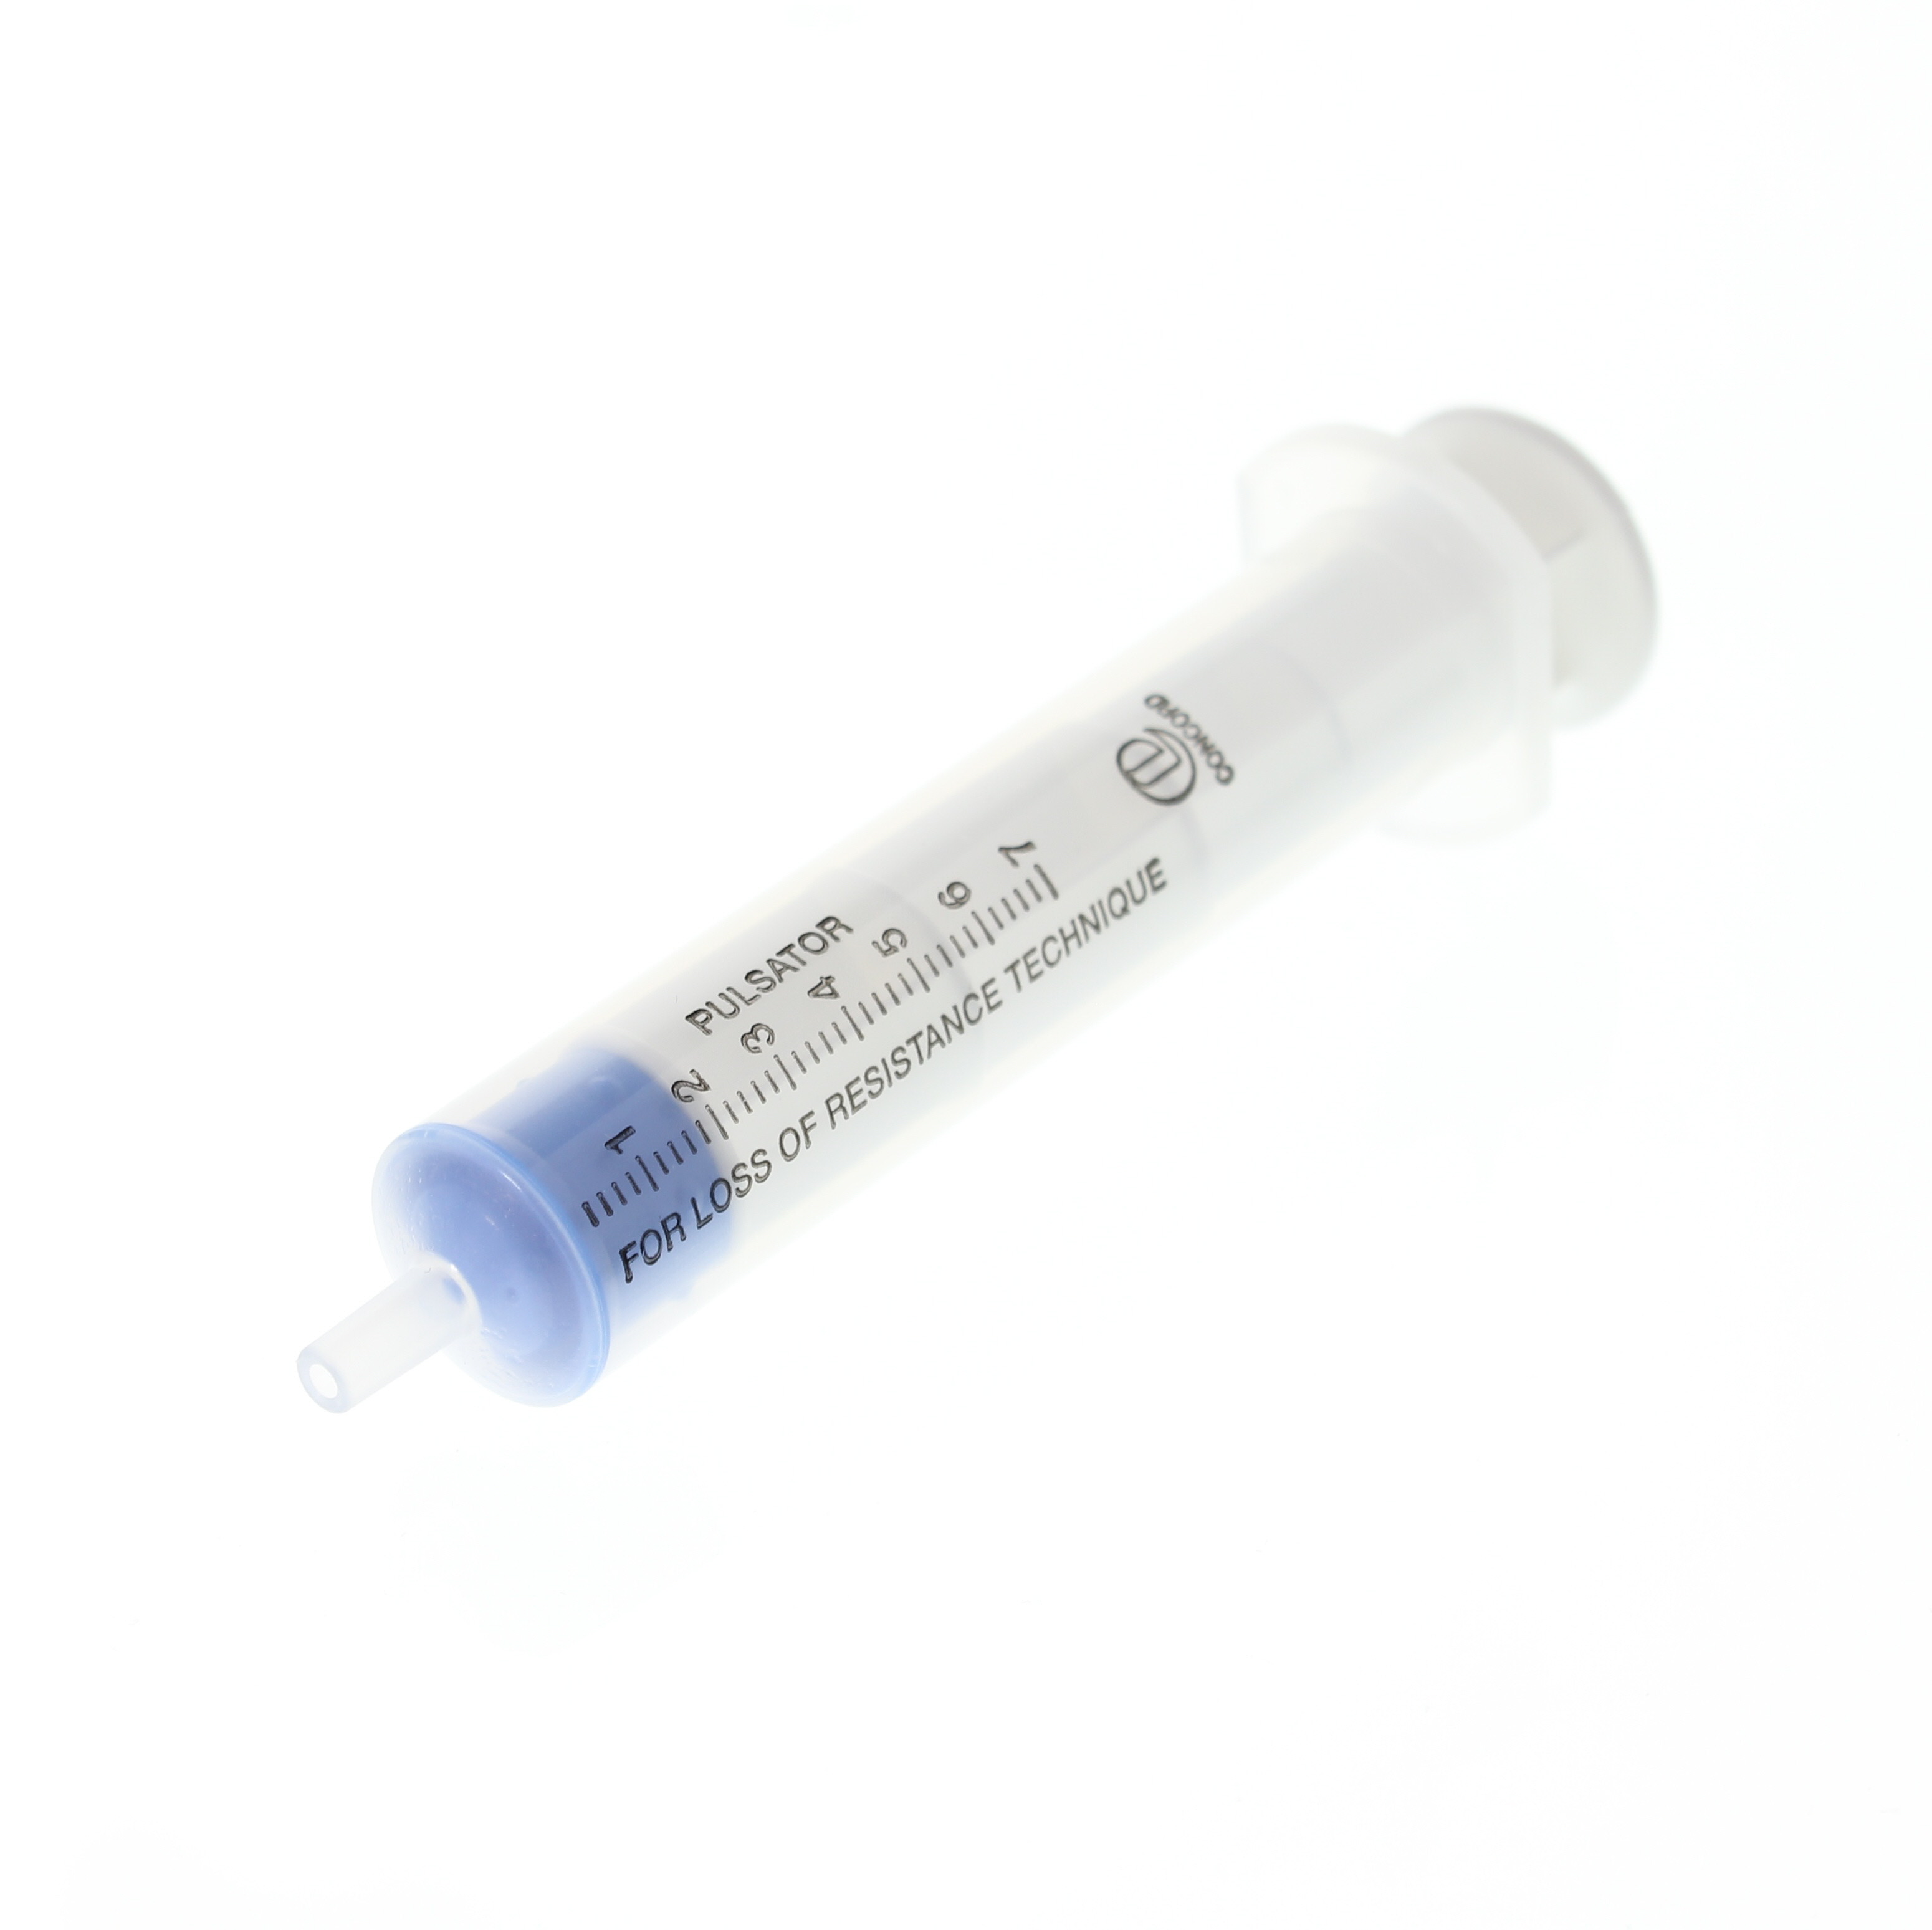 Pulsator® 7ml Plastic LOR Syringe (Luer-Slip): Clint Pharmaceuticals